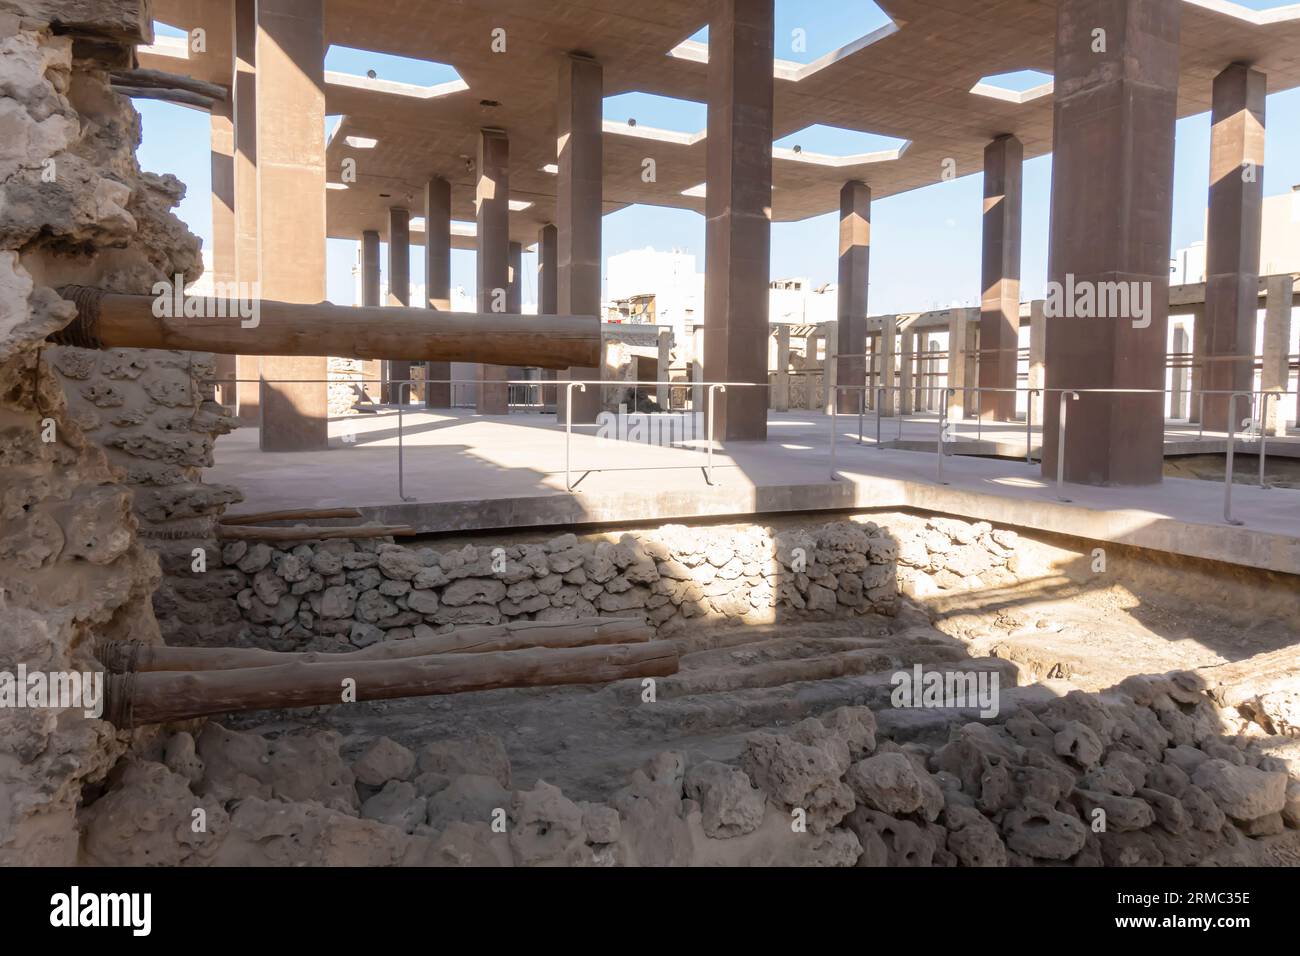 Pearling Path Visitor Center, designed by architect Valerio Olgiati, Muharraq Bahrain Stock Photo